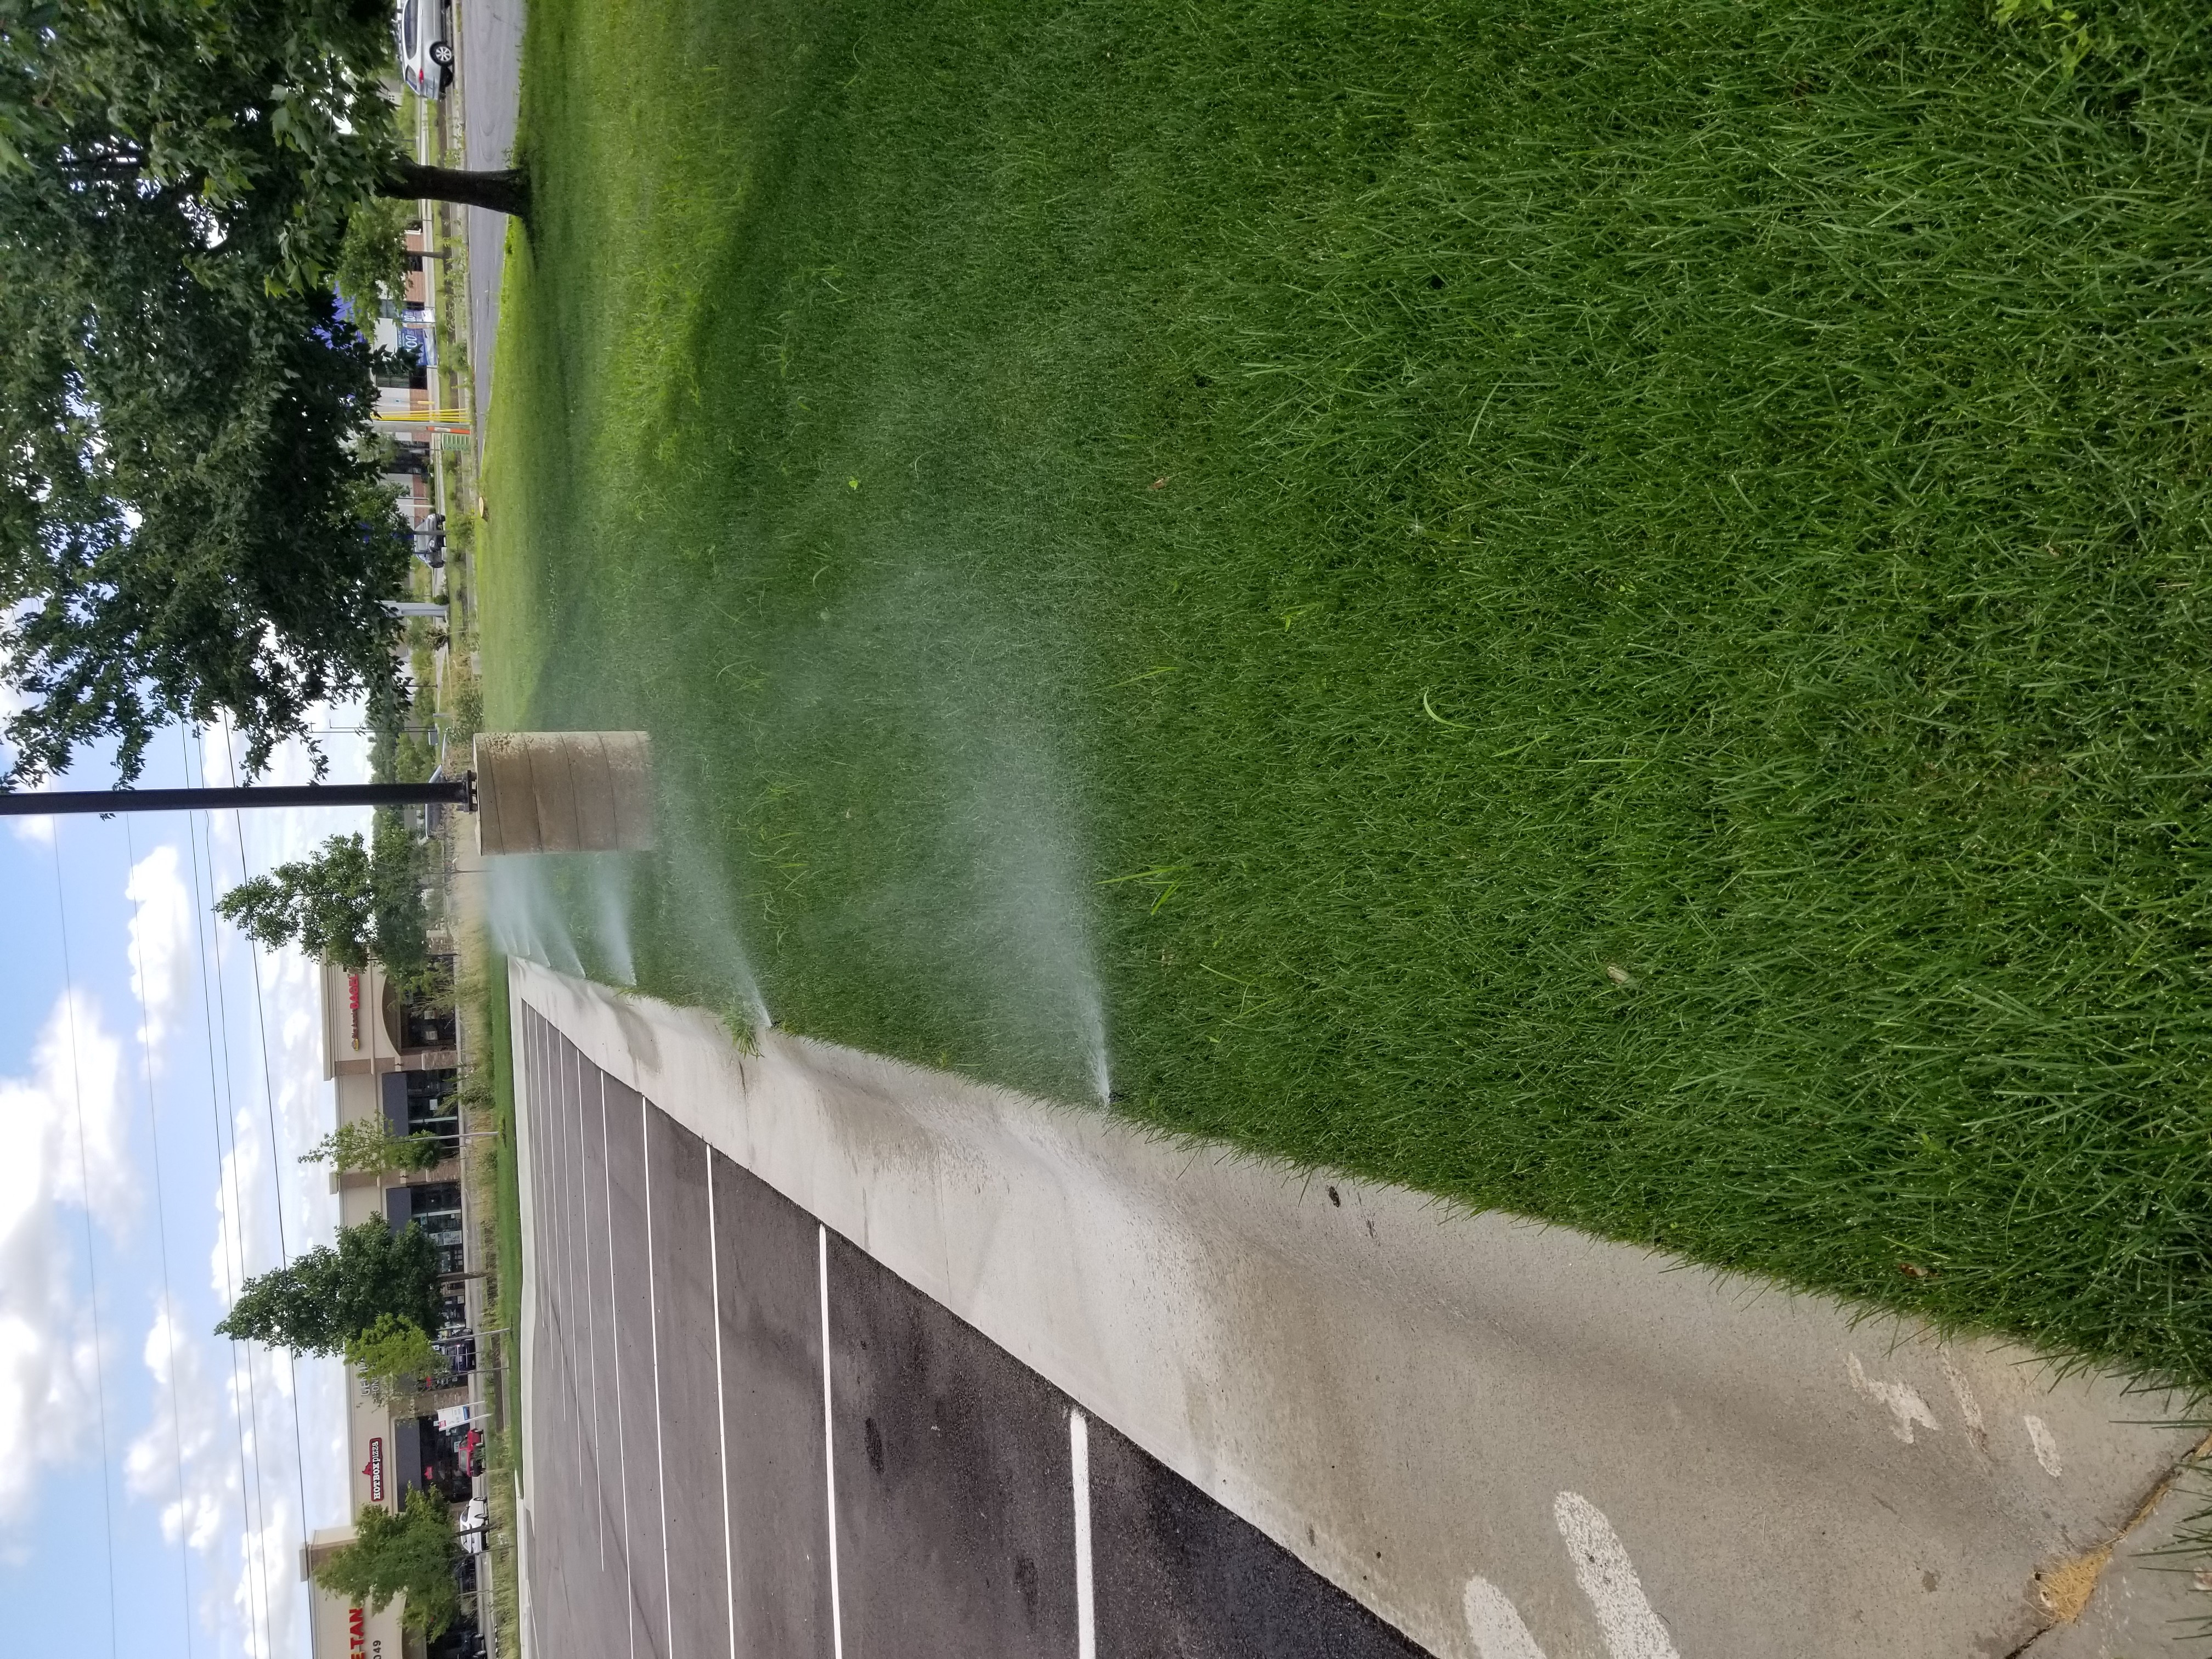 Lafayette Commercial Sprinkler System Project